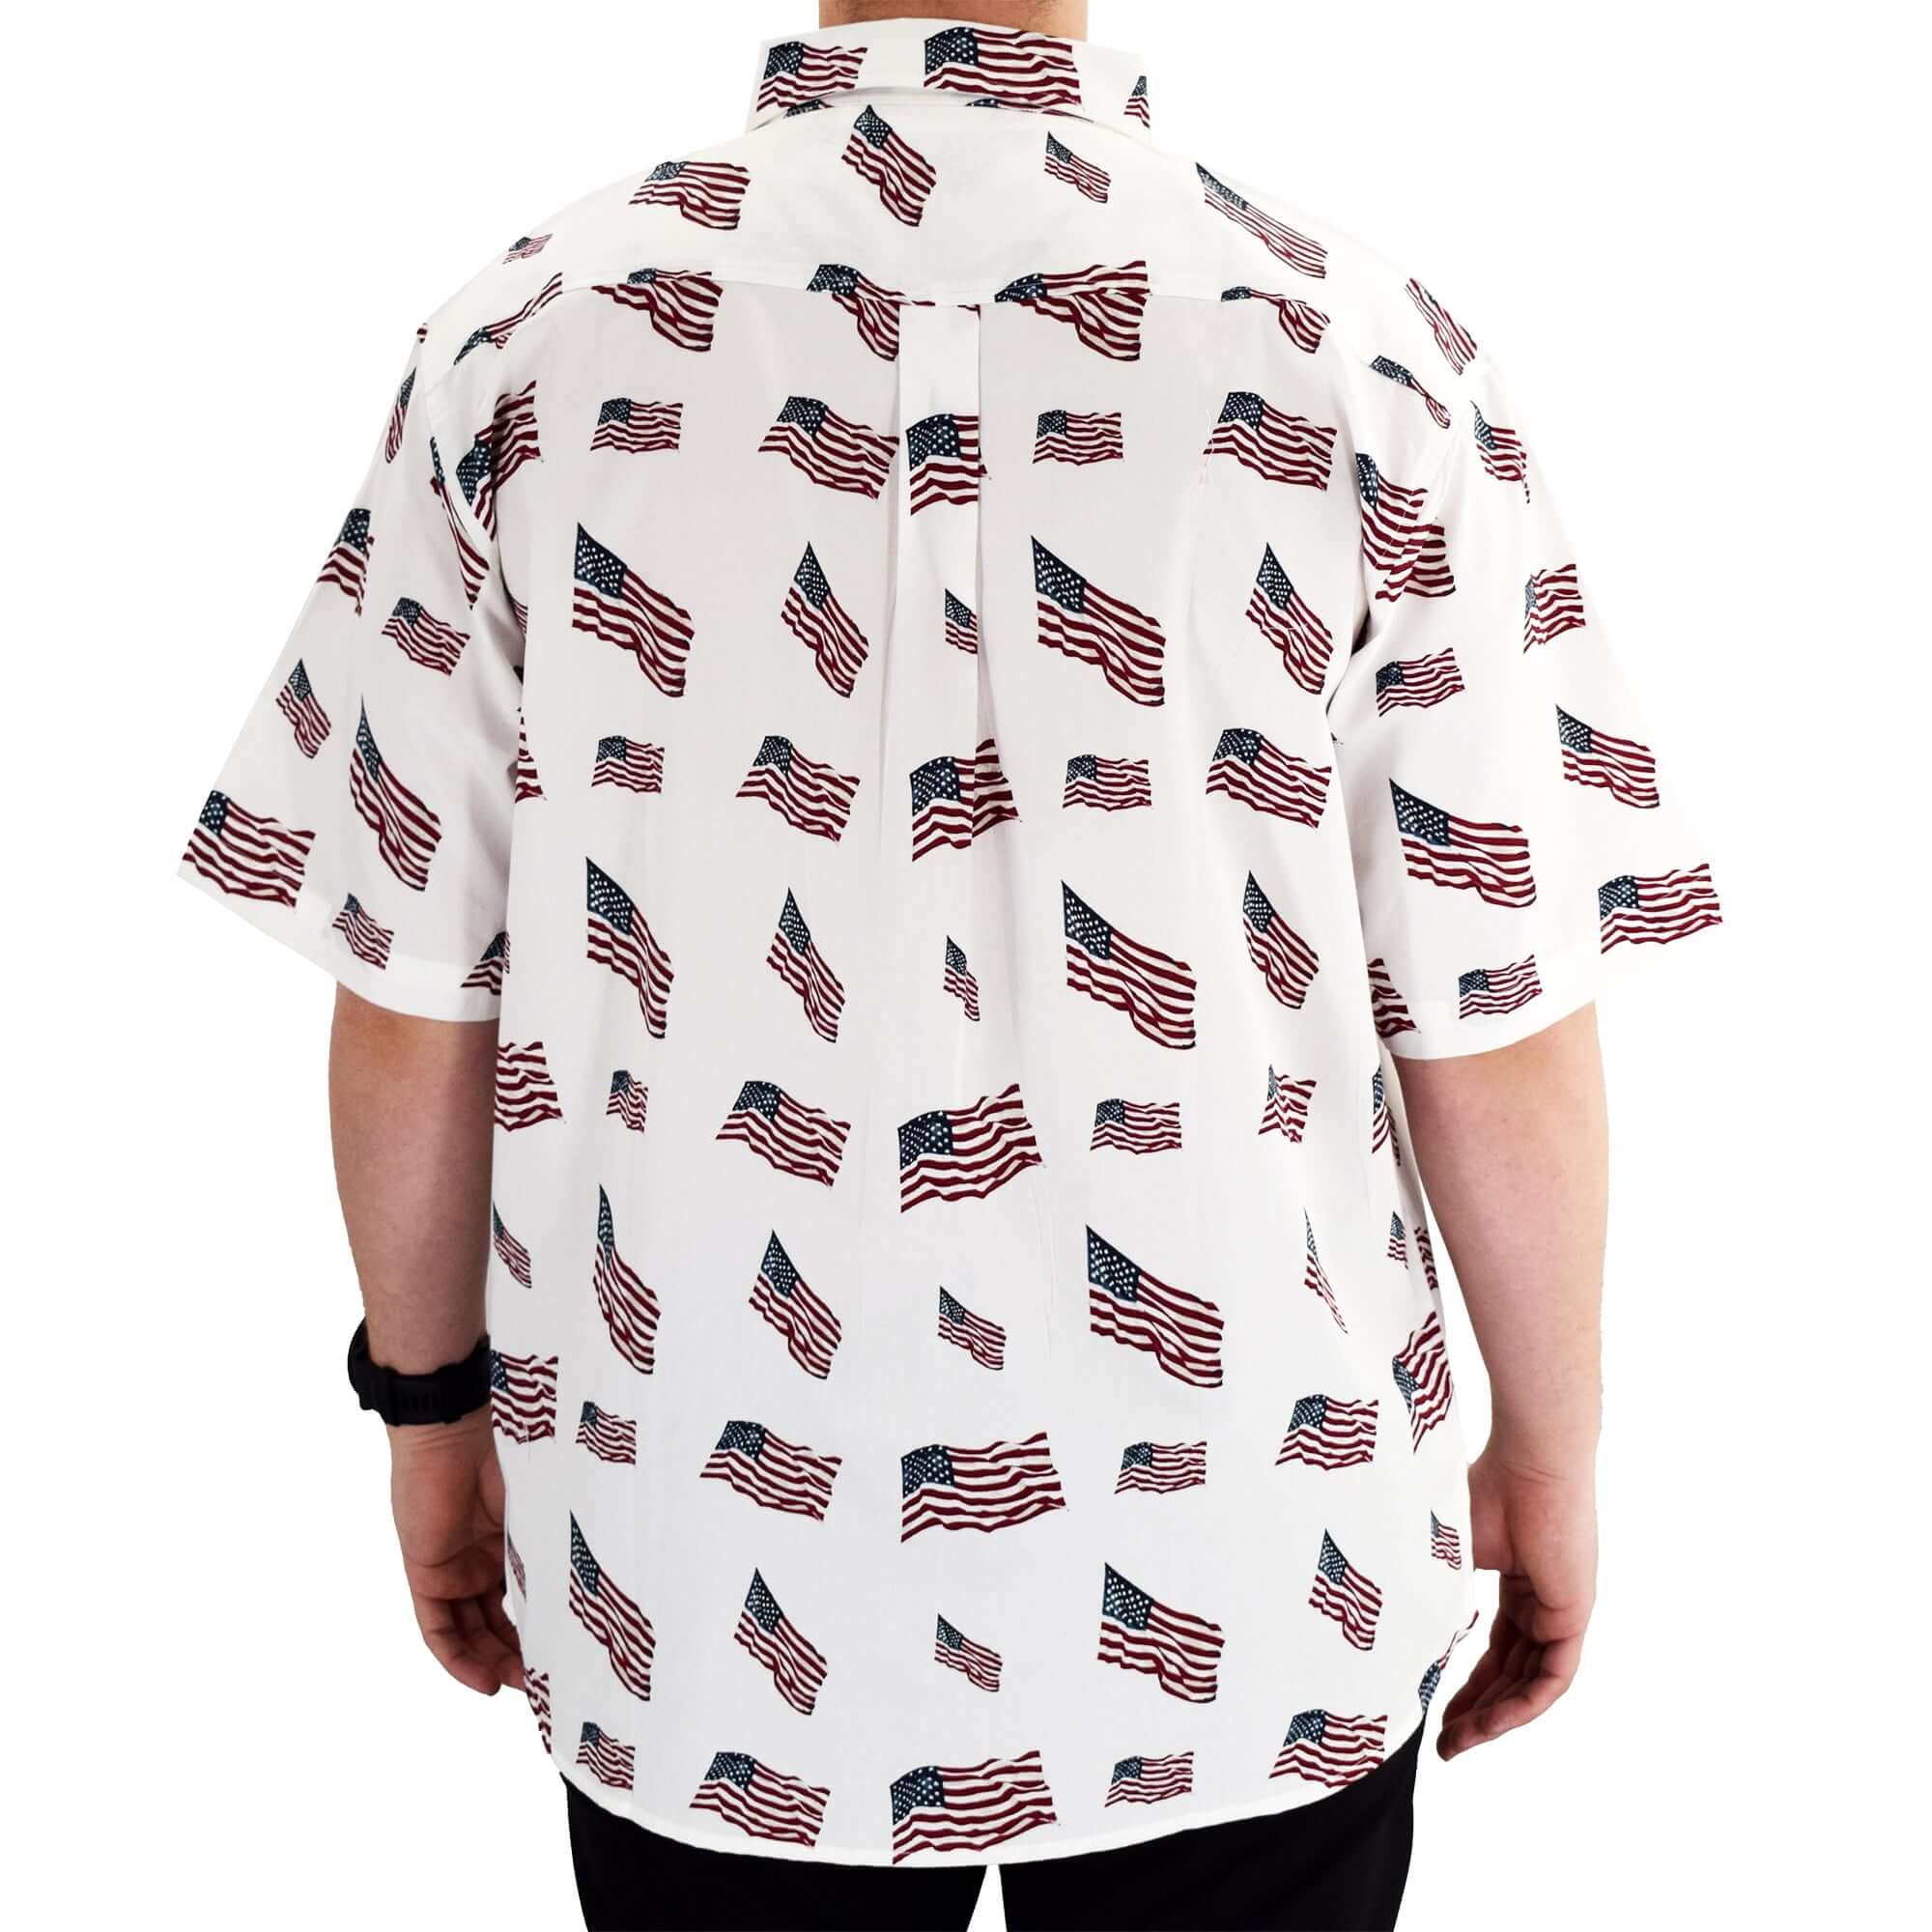 Men's Flags Allover 100% Cotton Button-Up Shirt – The Flag Shirt